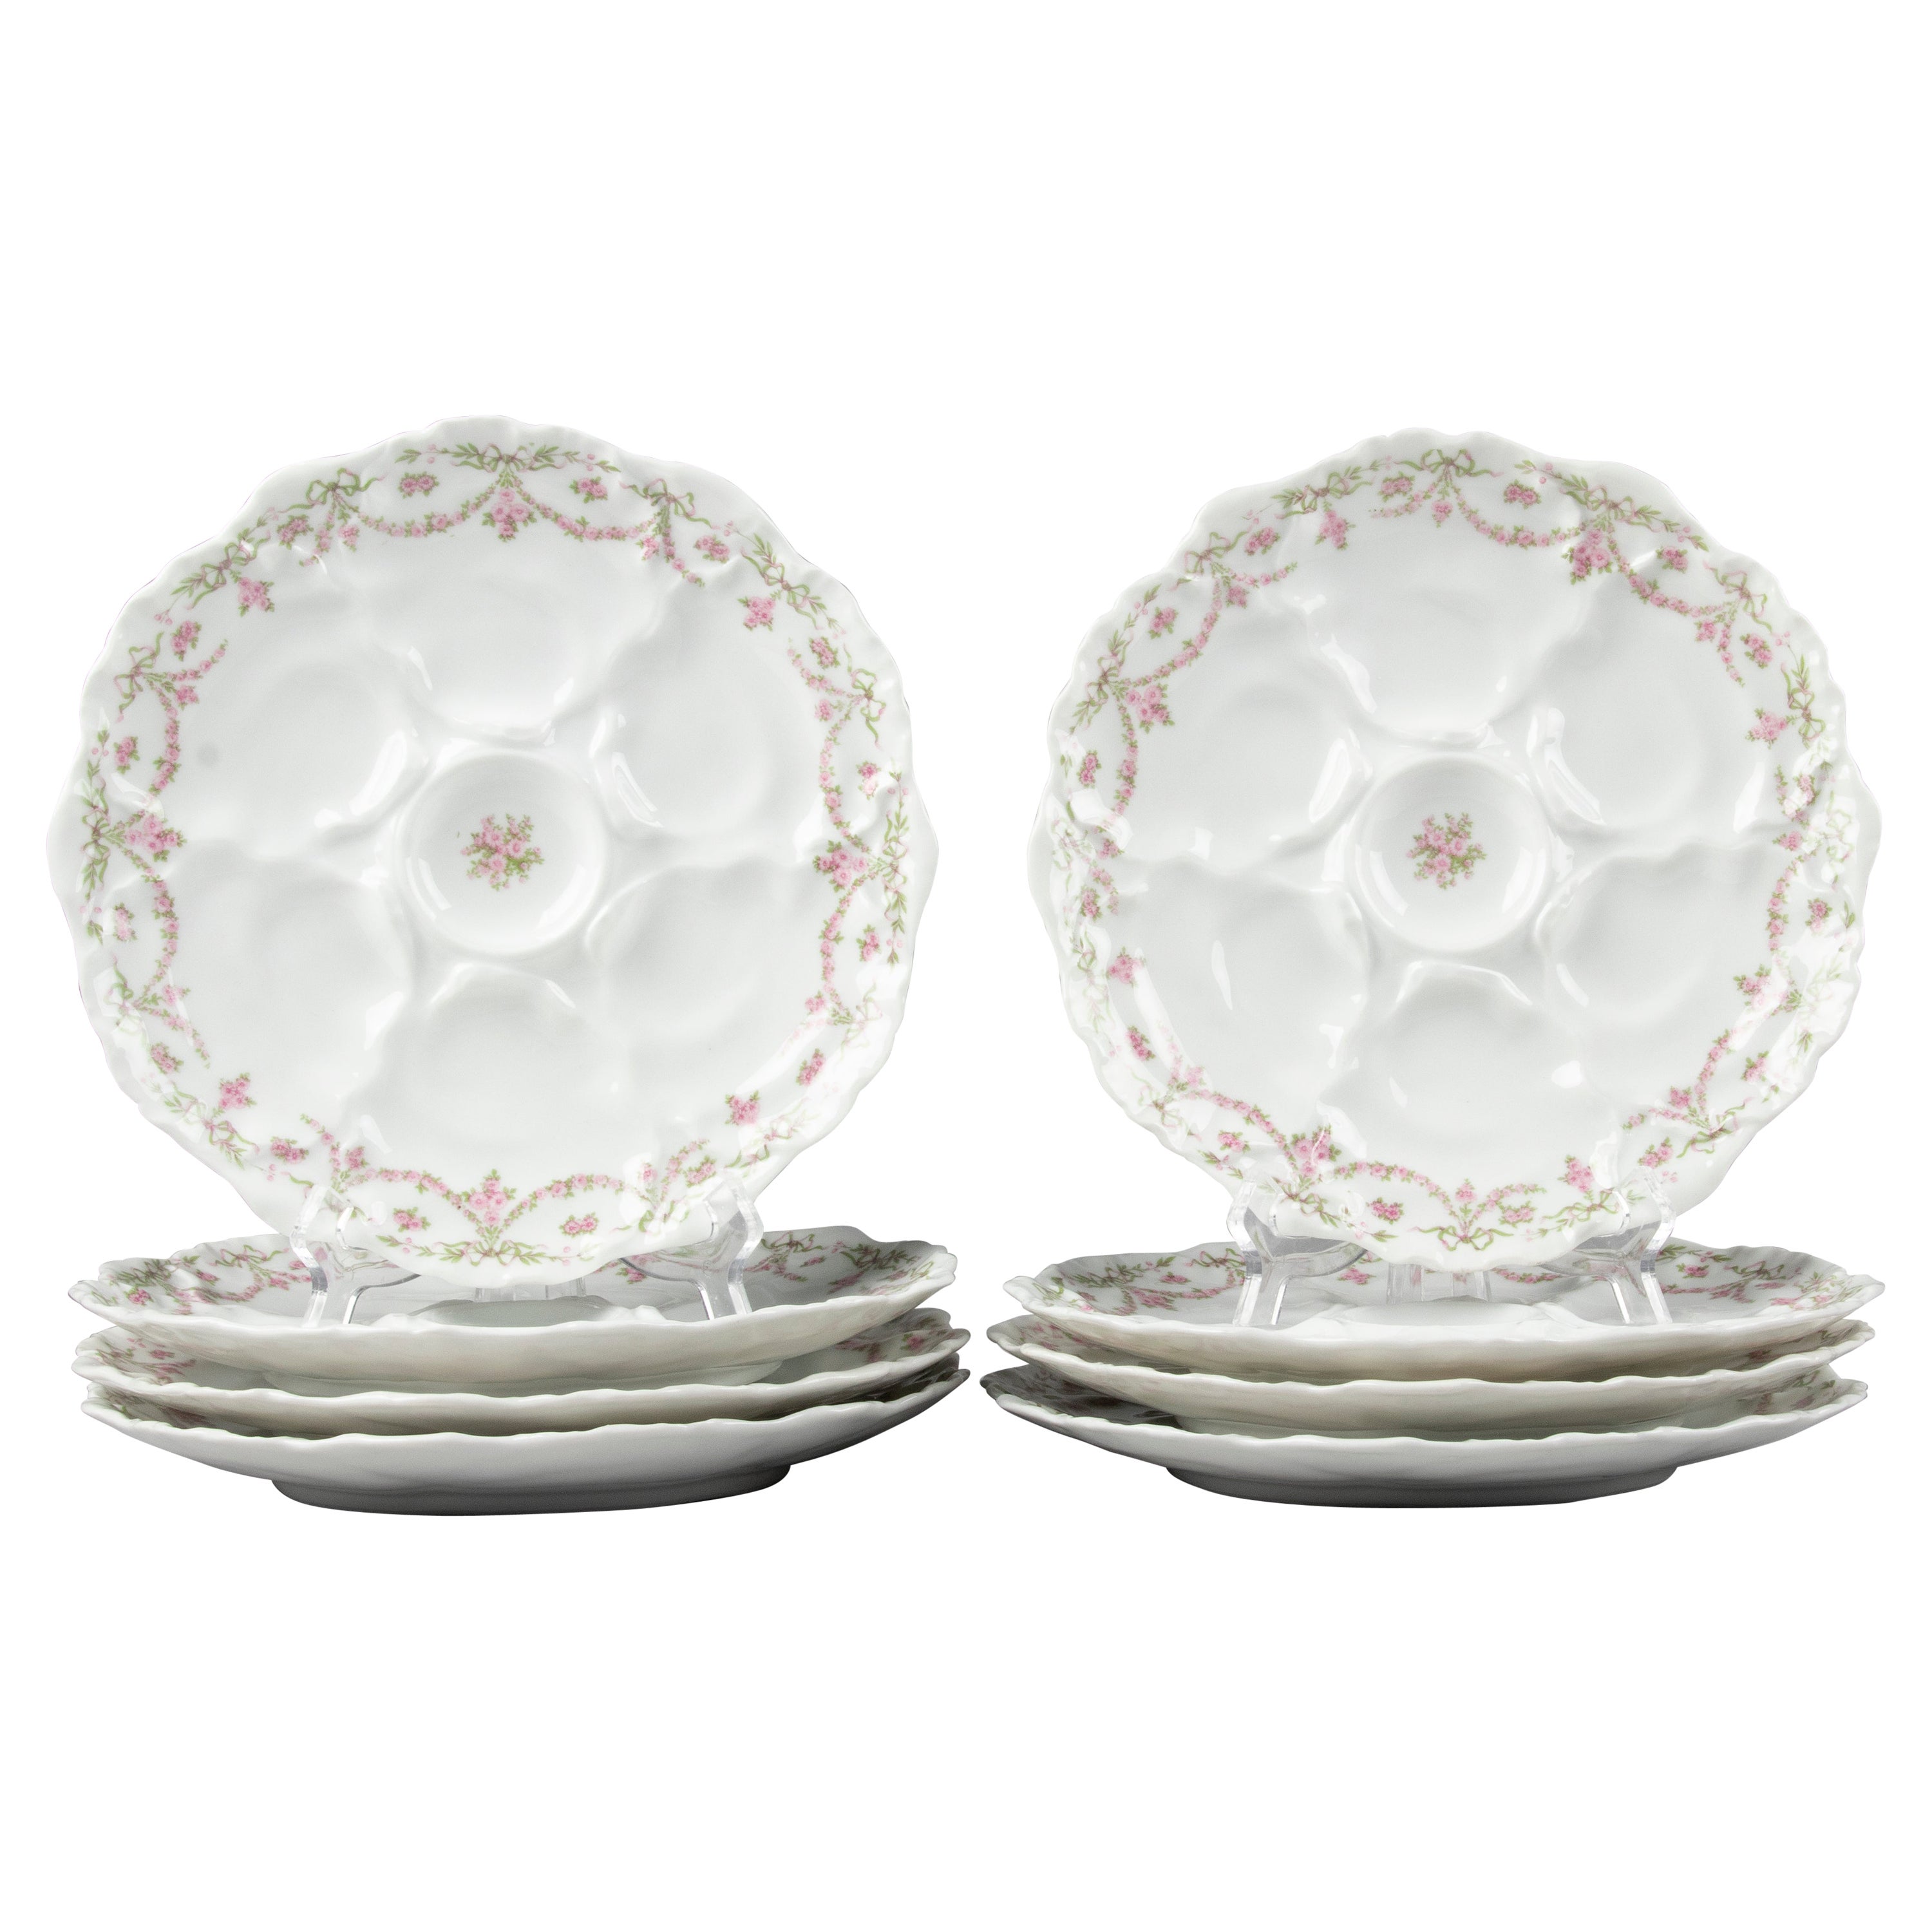 Set of 8 Porcelain Oyster Plates by Limoges